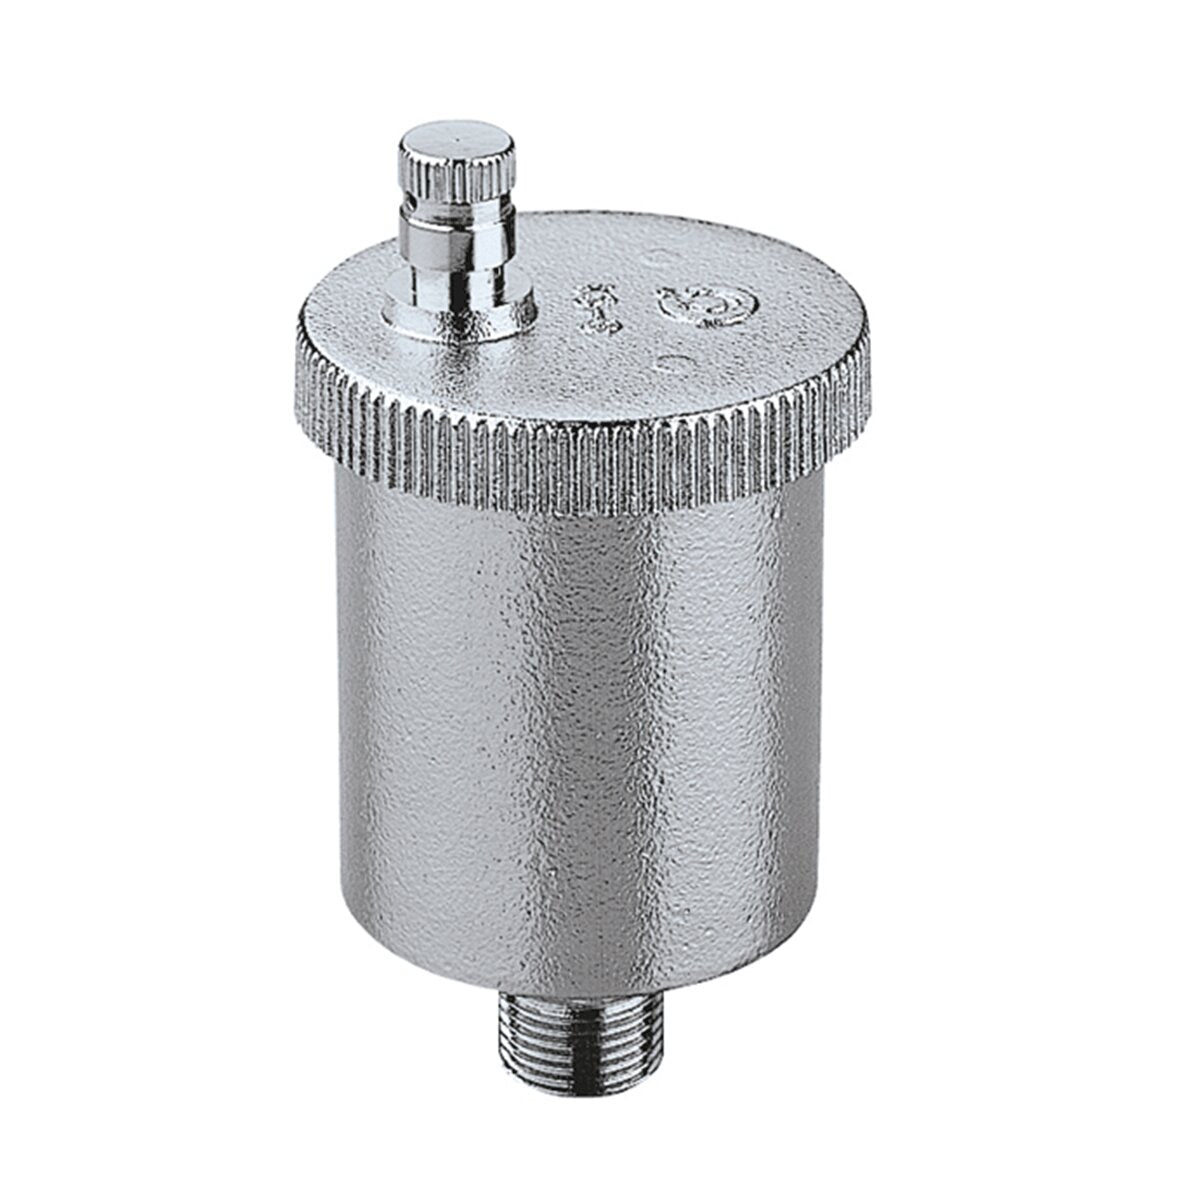 Caleffi 5022 Valcal automatic air vent valve 1/2" M